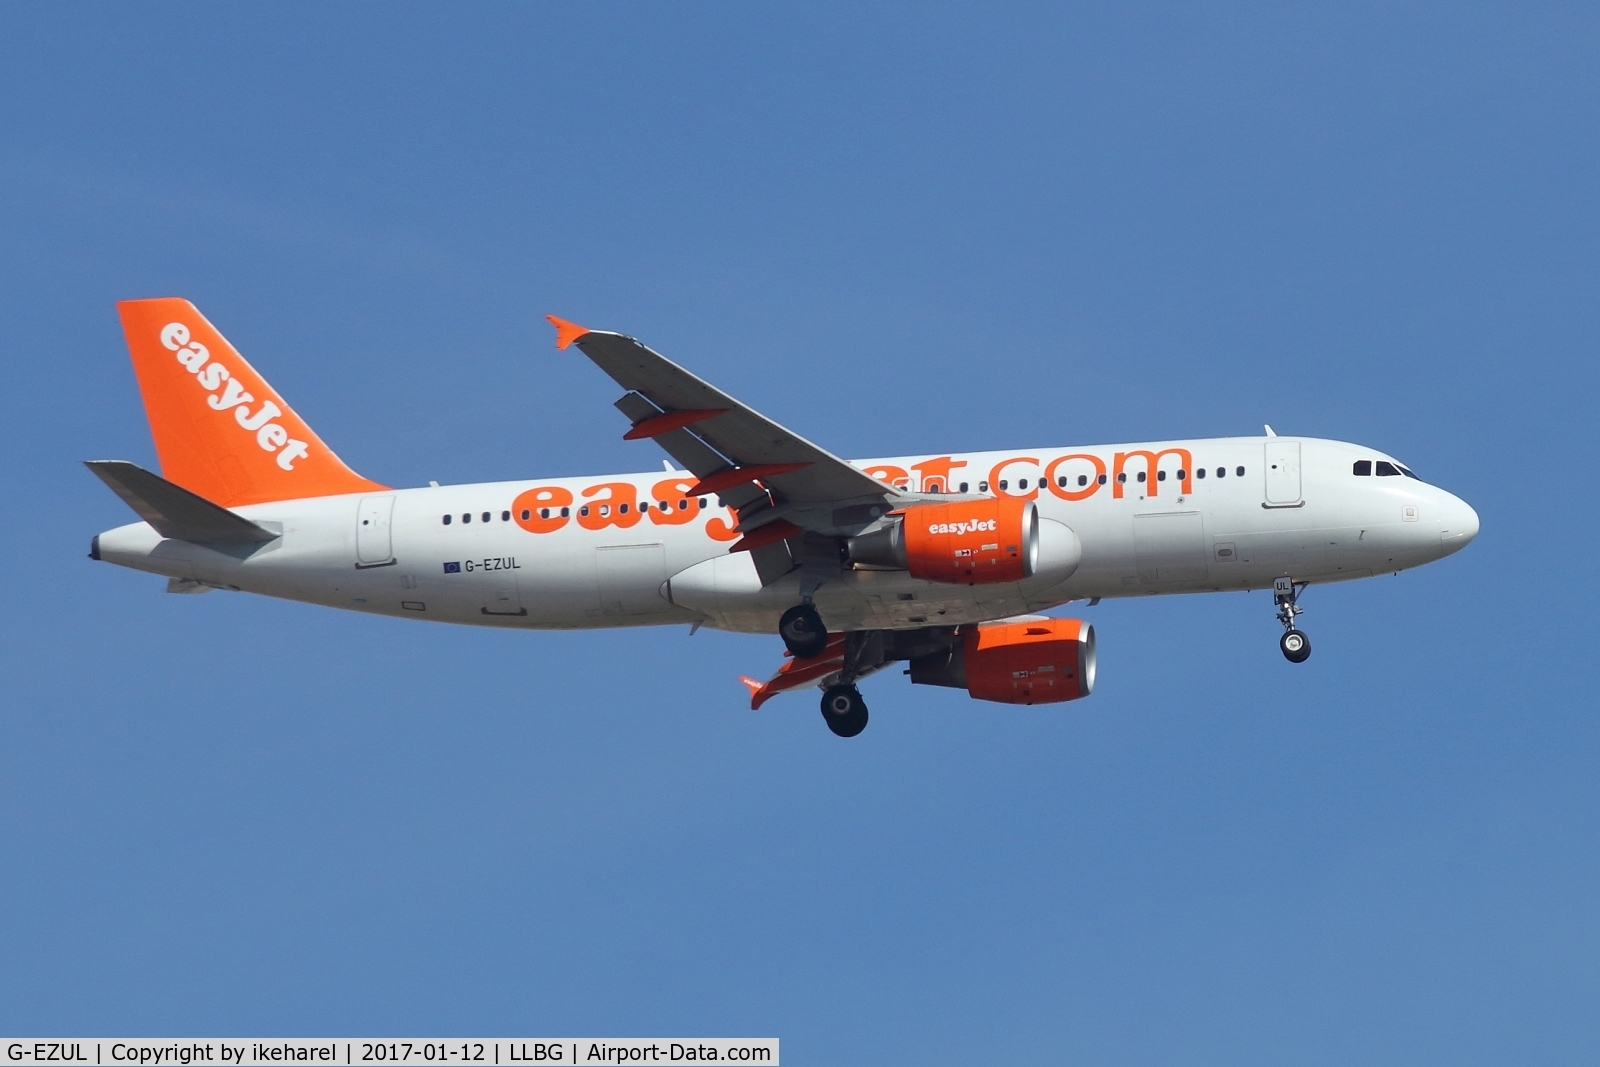 G-EZUL, 2012 Airbus A320-214 C/N 5019, Flight from Milano upon landing on runway 12.